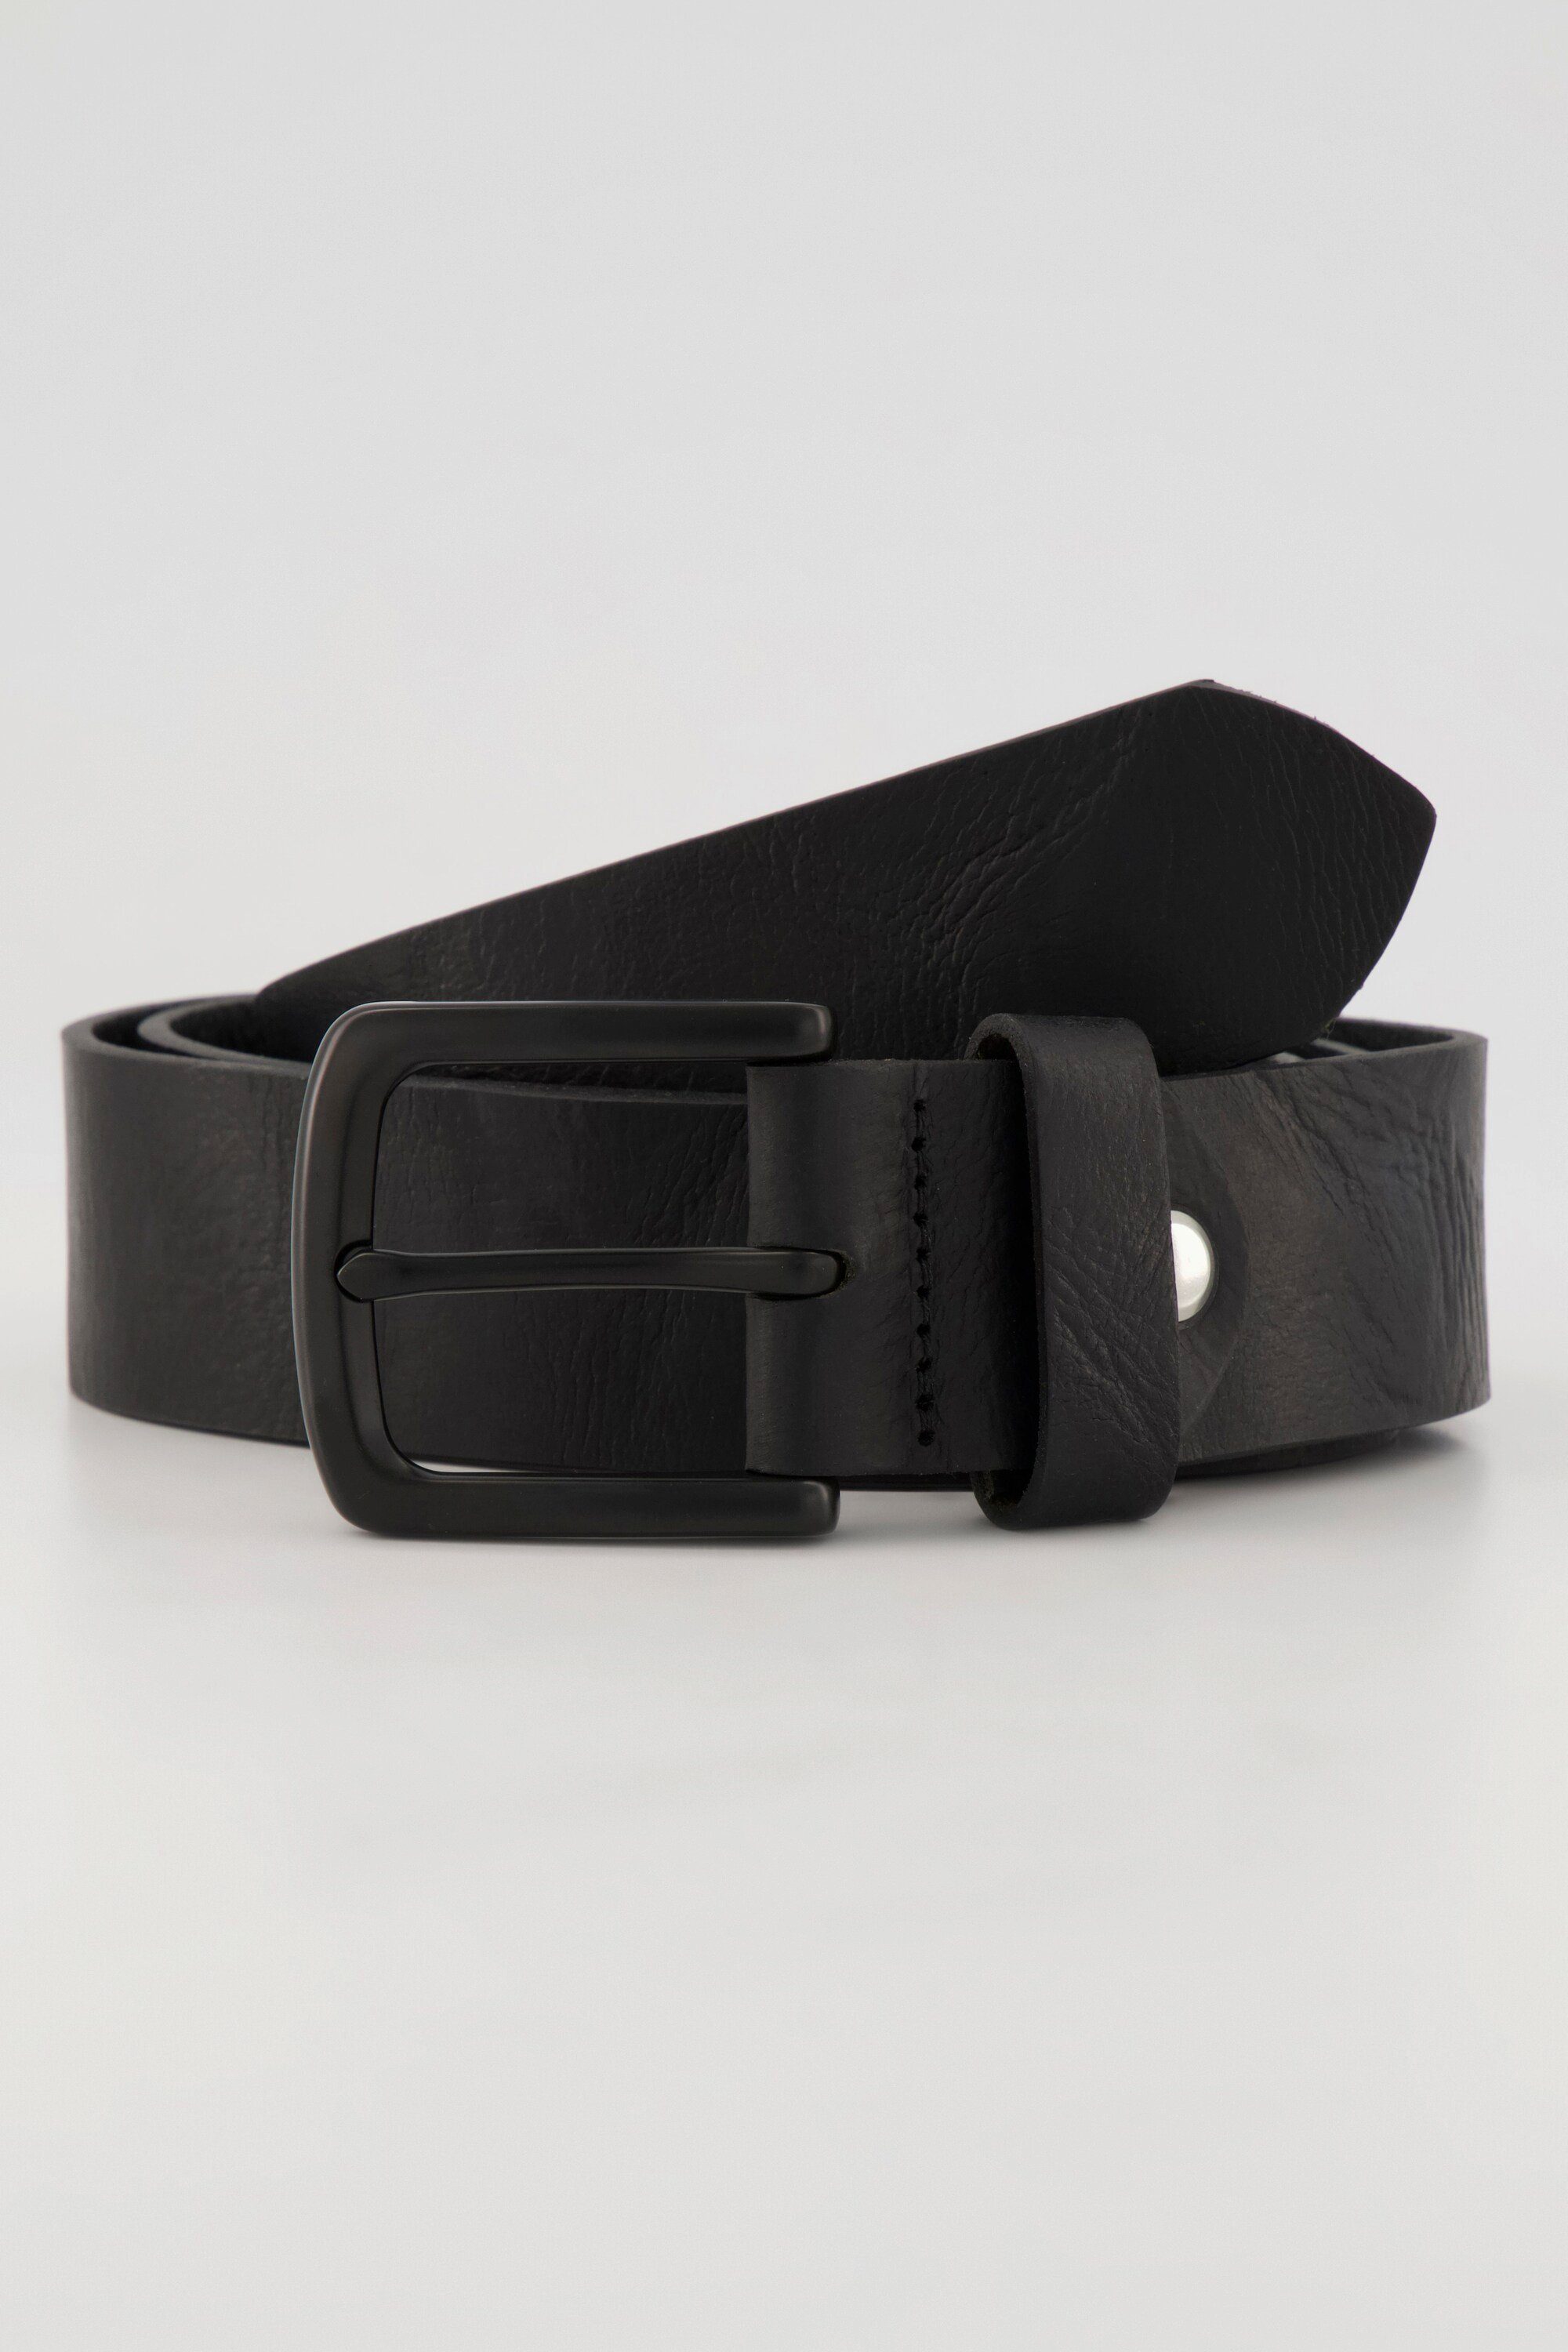 Hüftgürtel 4cm JP1880 breit schwarz Metall-Schließe Leder-Gürtel